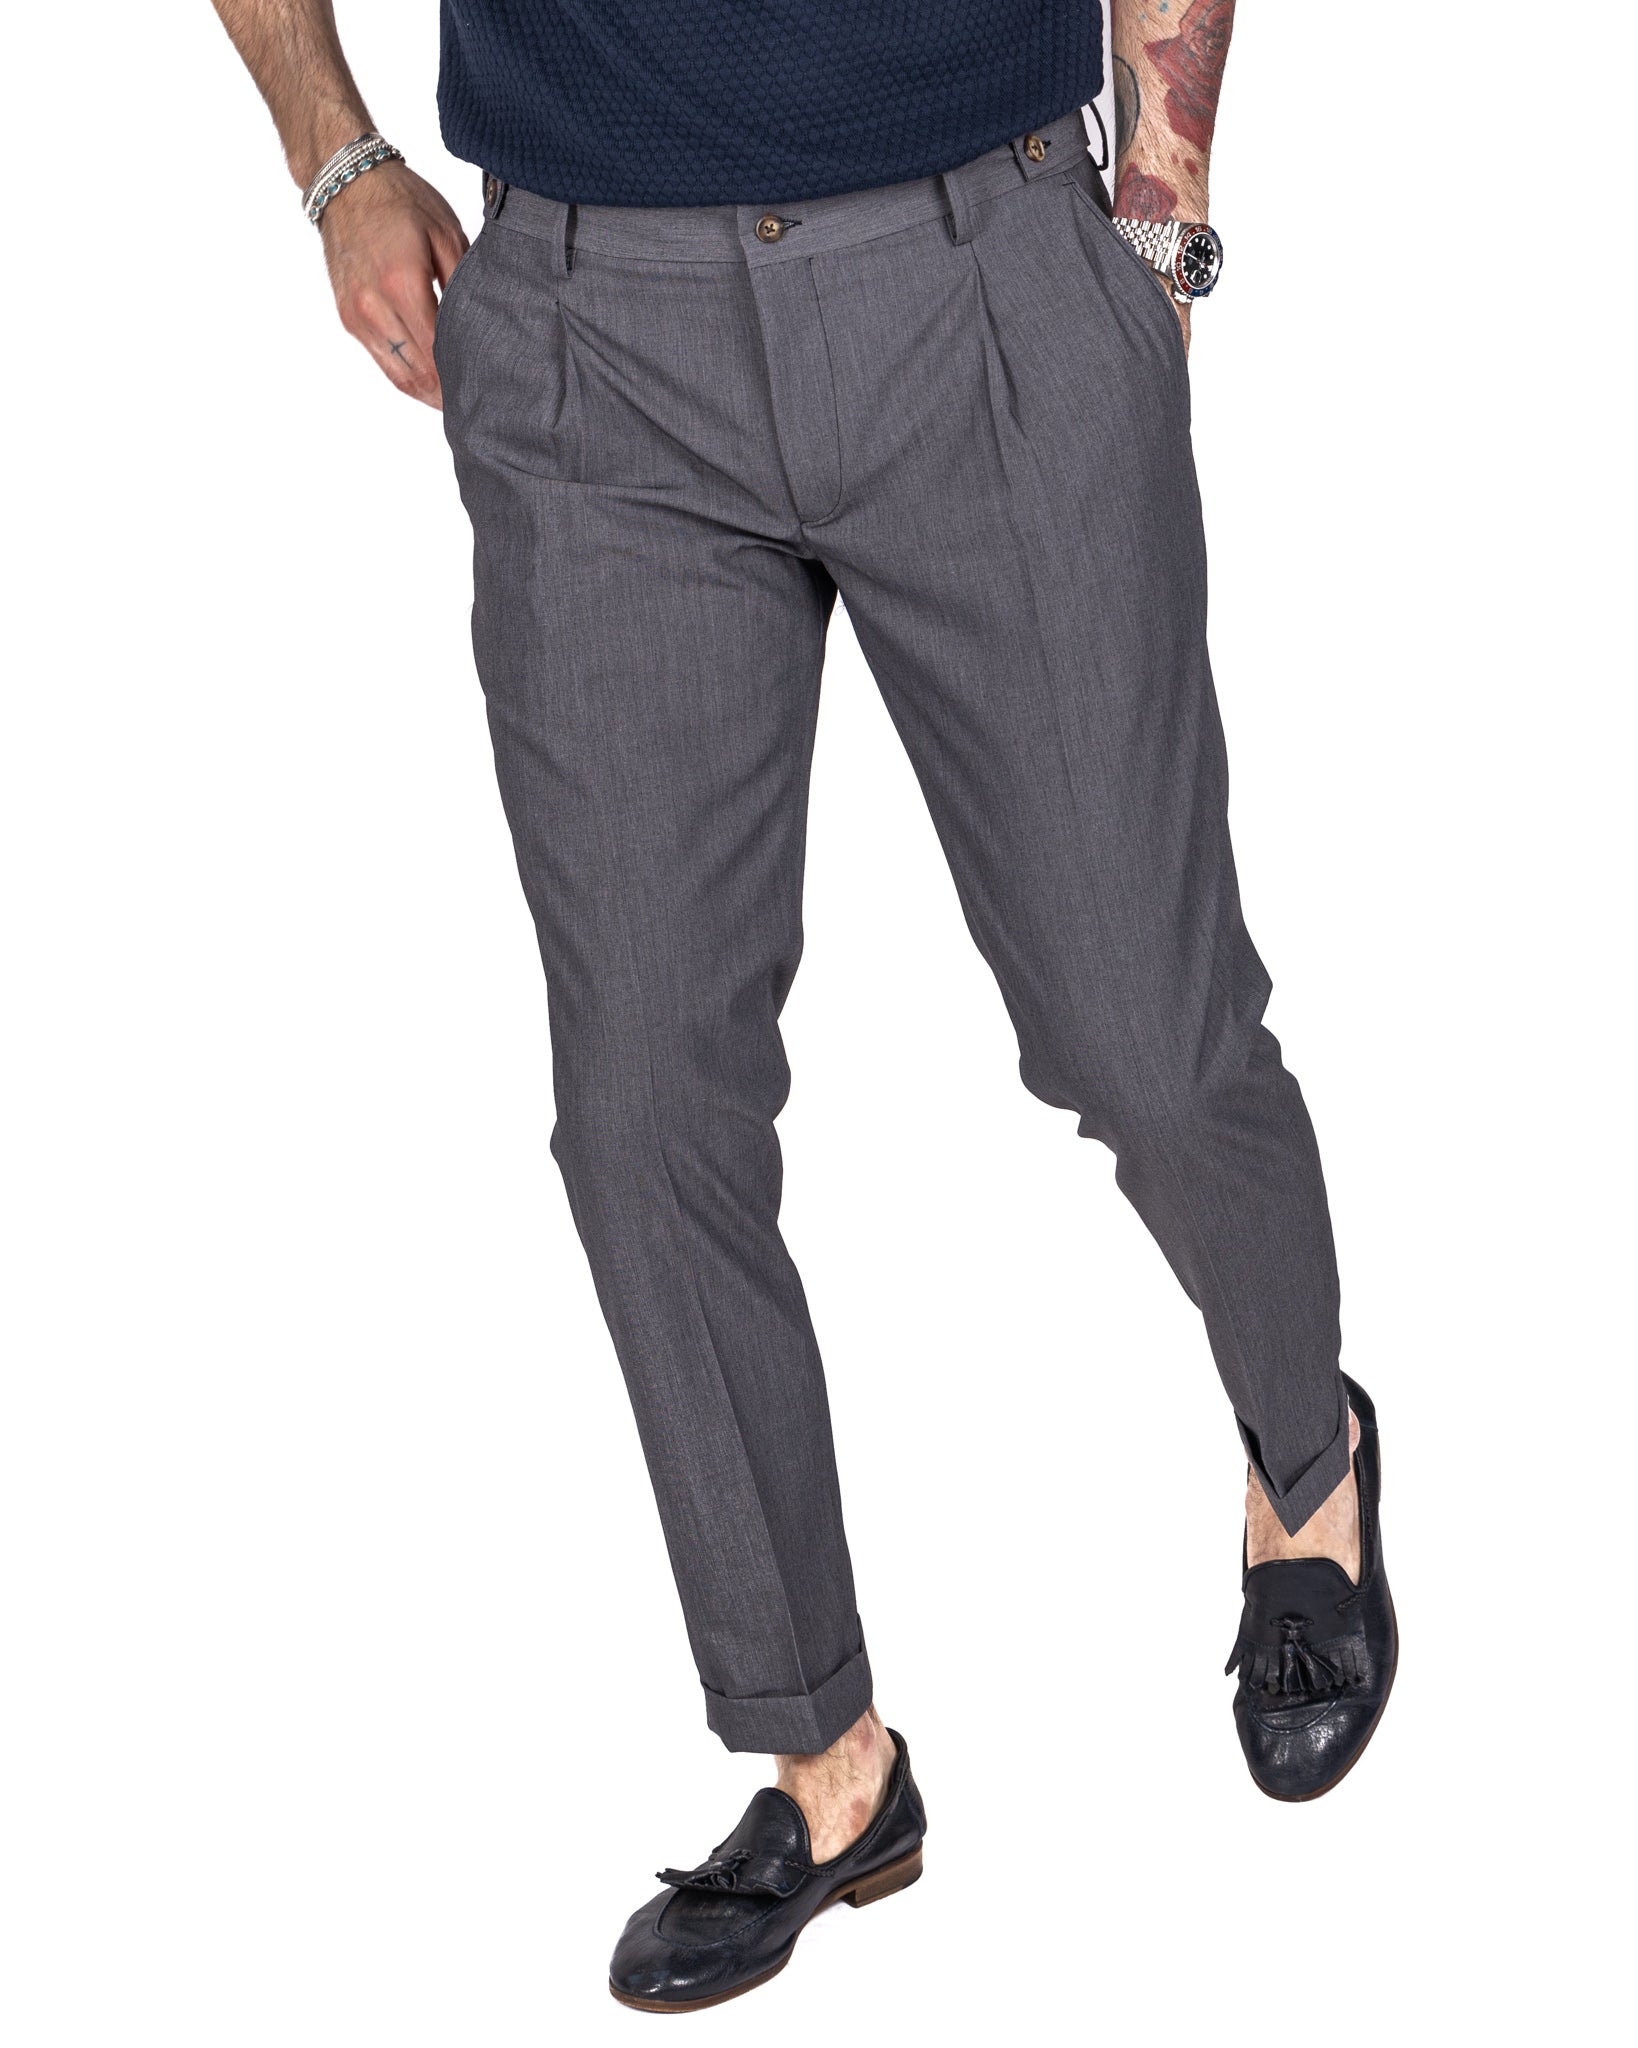 Milano - pantalon basique gris